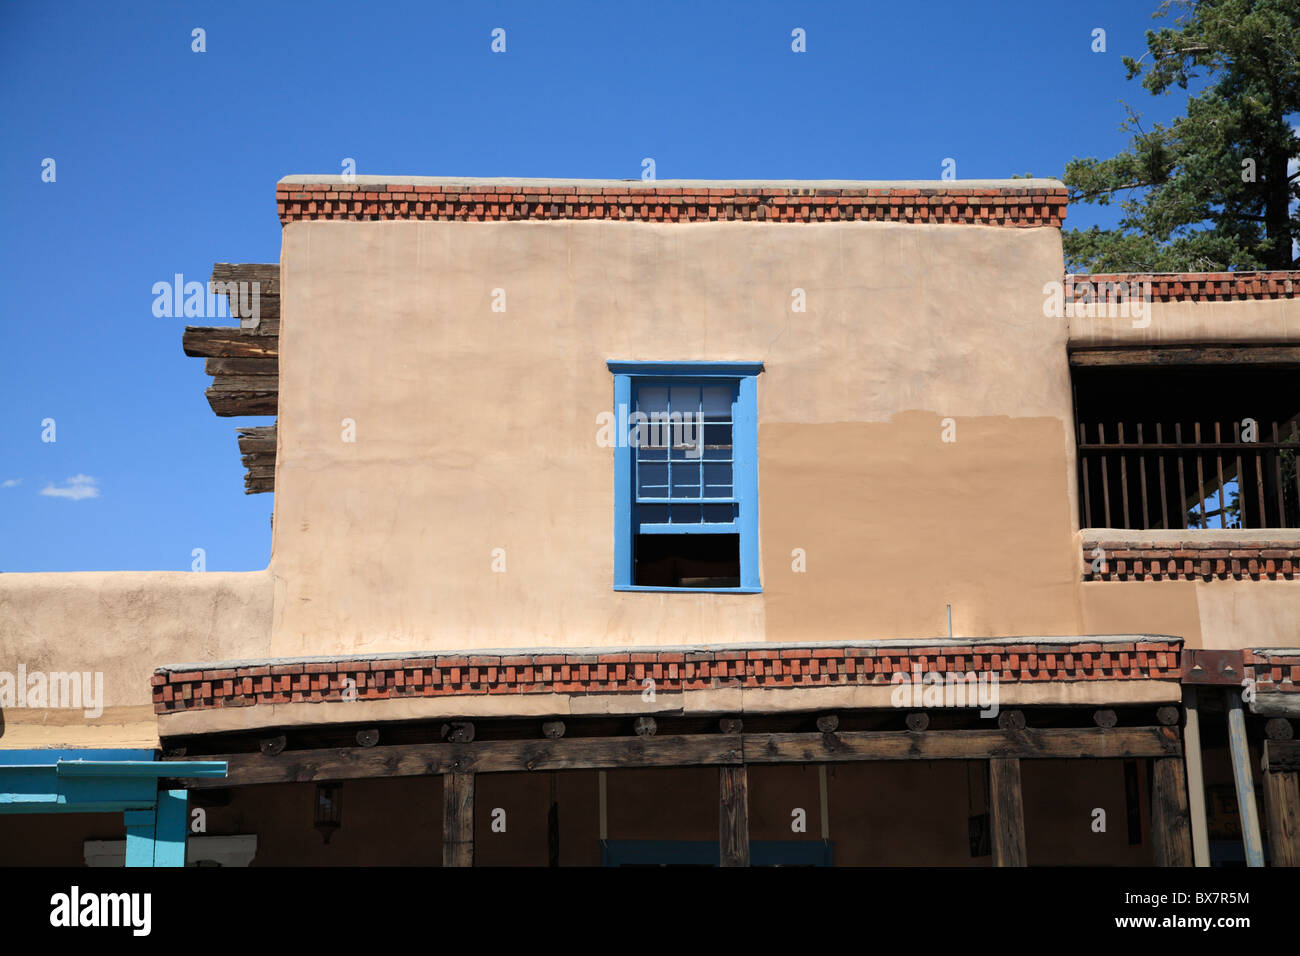 Adobe architecture, Santa Fe, New Mexico, USA Stock Photo